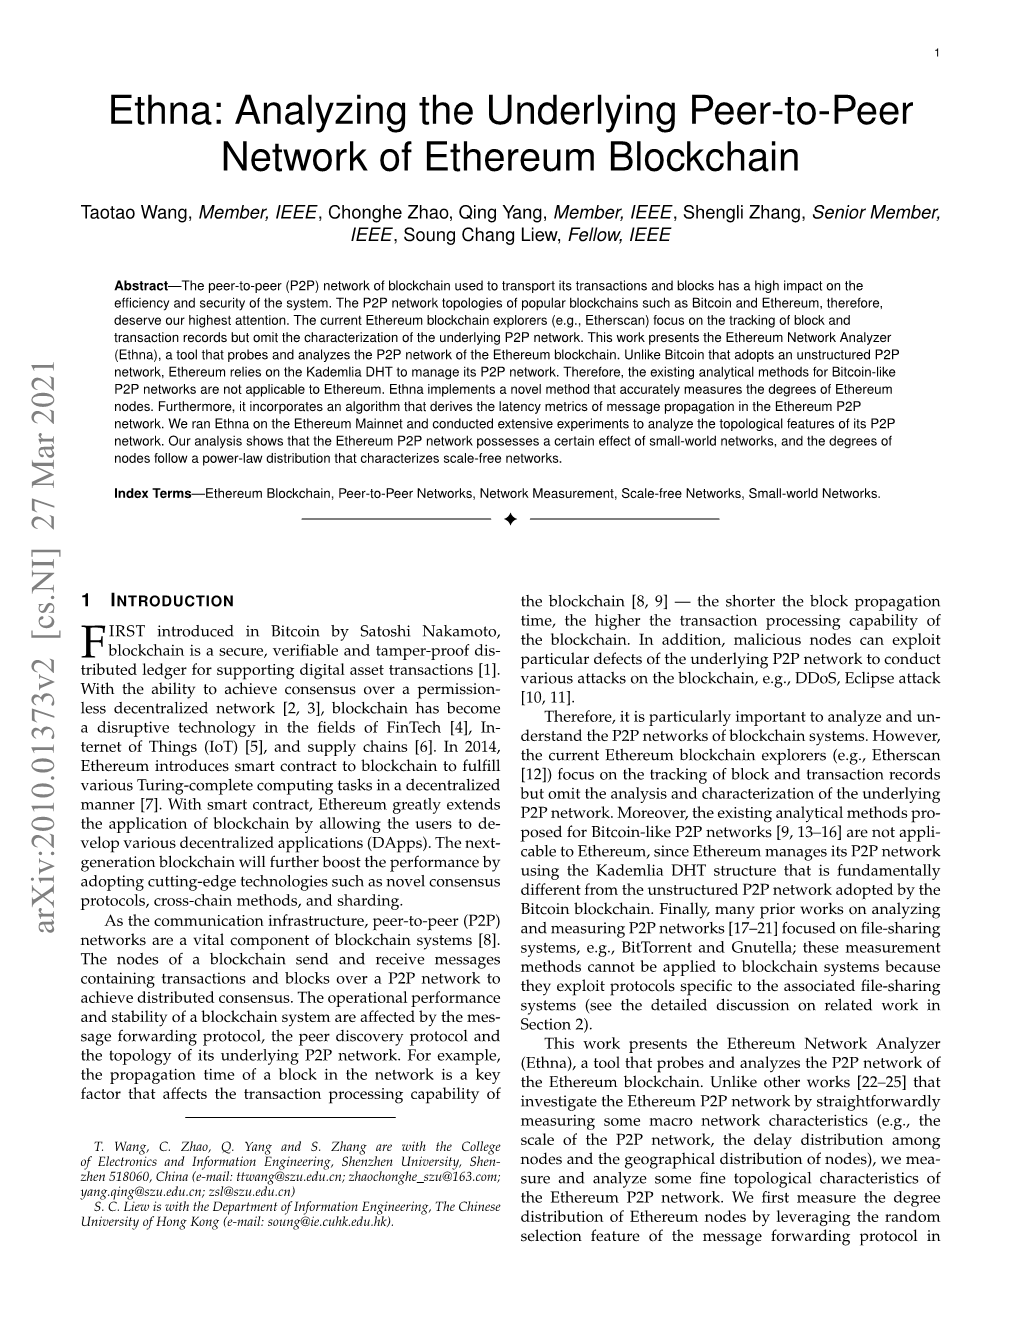 Ethna: Analyzing the Underlying Peer-To-Peer Network of Ethereum Blockchain